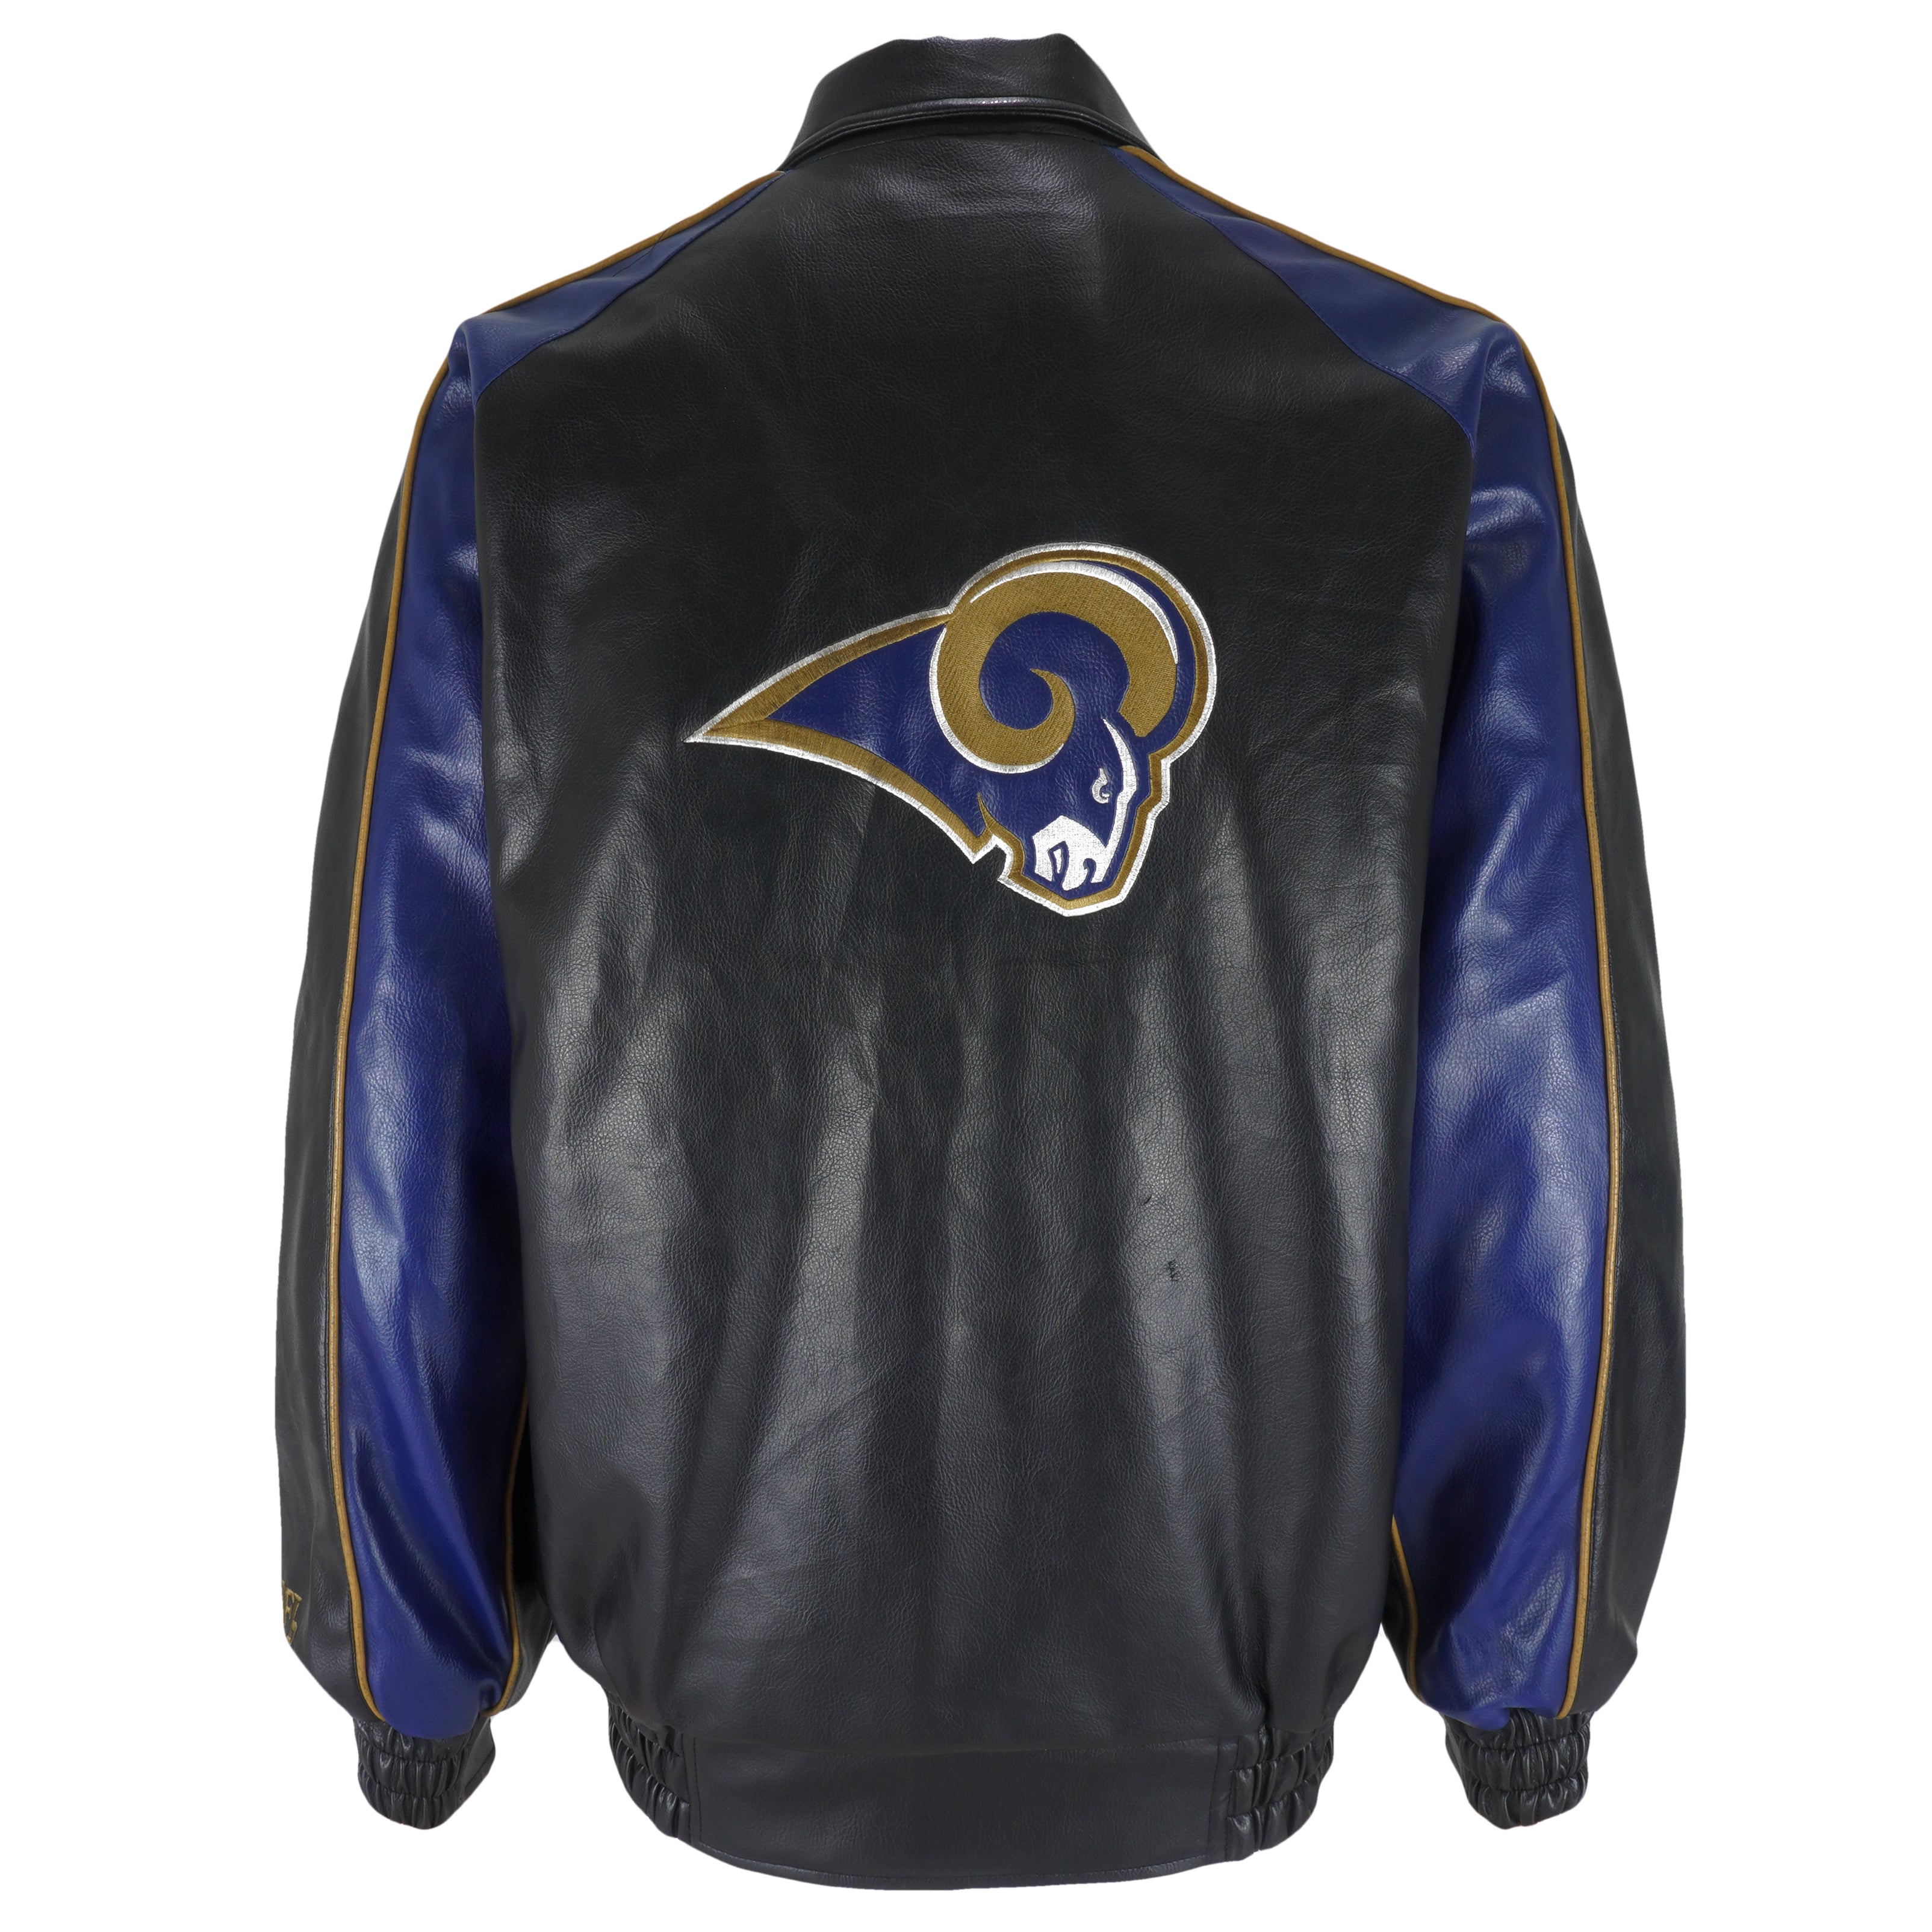 Vintage NFL G-III Apparel St. Louis RAMS Zippered Jacket Size 